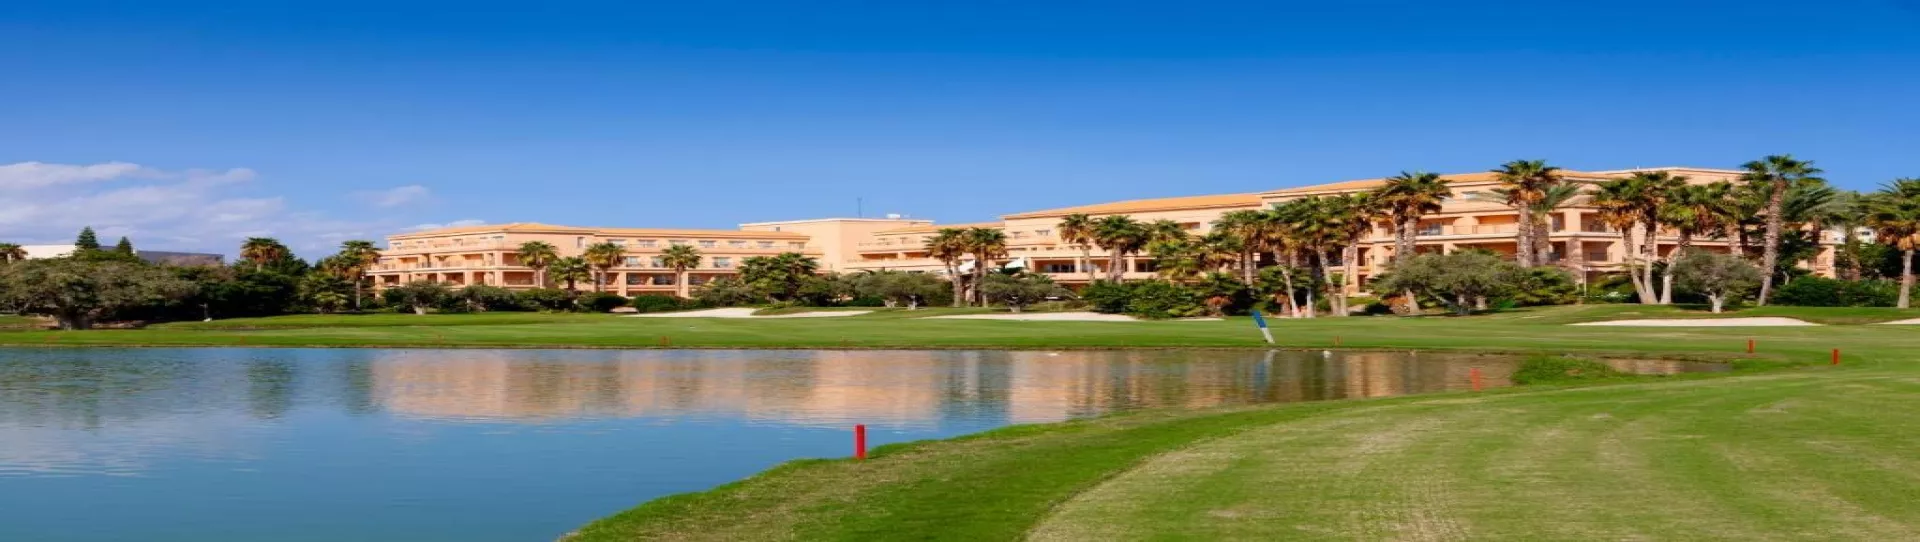 Spain golf holidays - Hotel Alicante Golf - Photo 1